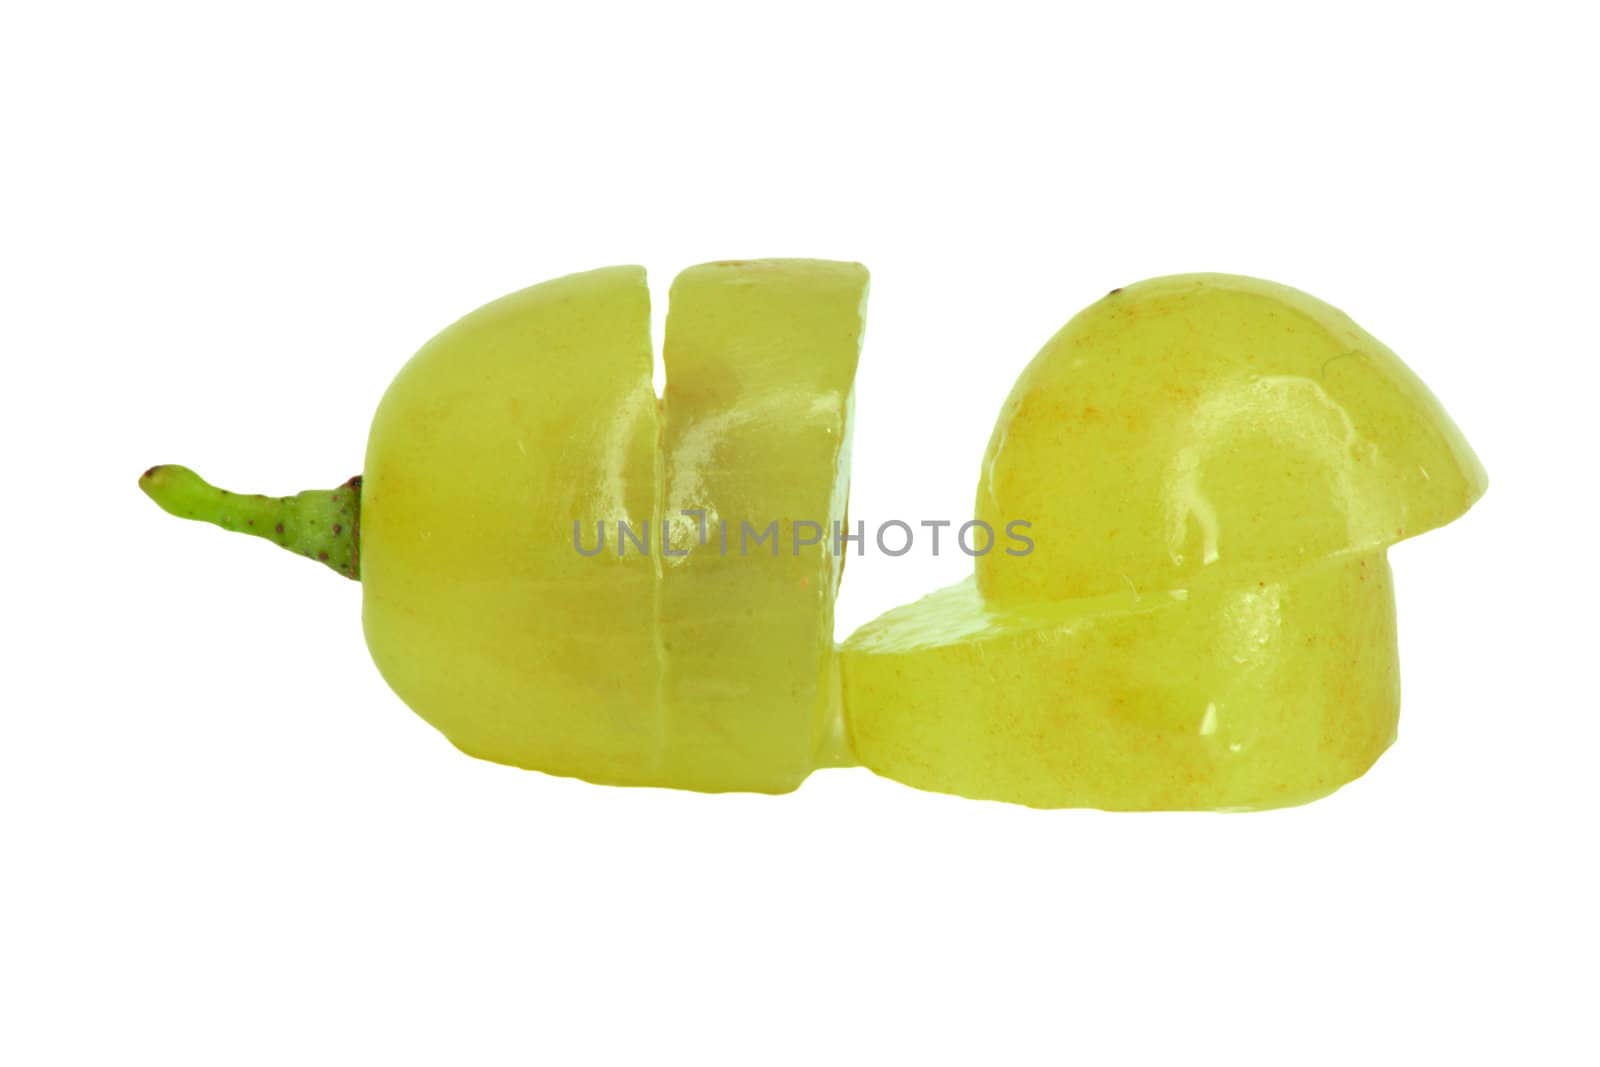 Translucent slice of green grape fruit, macro isolated on white 
